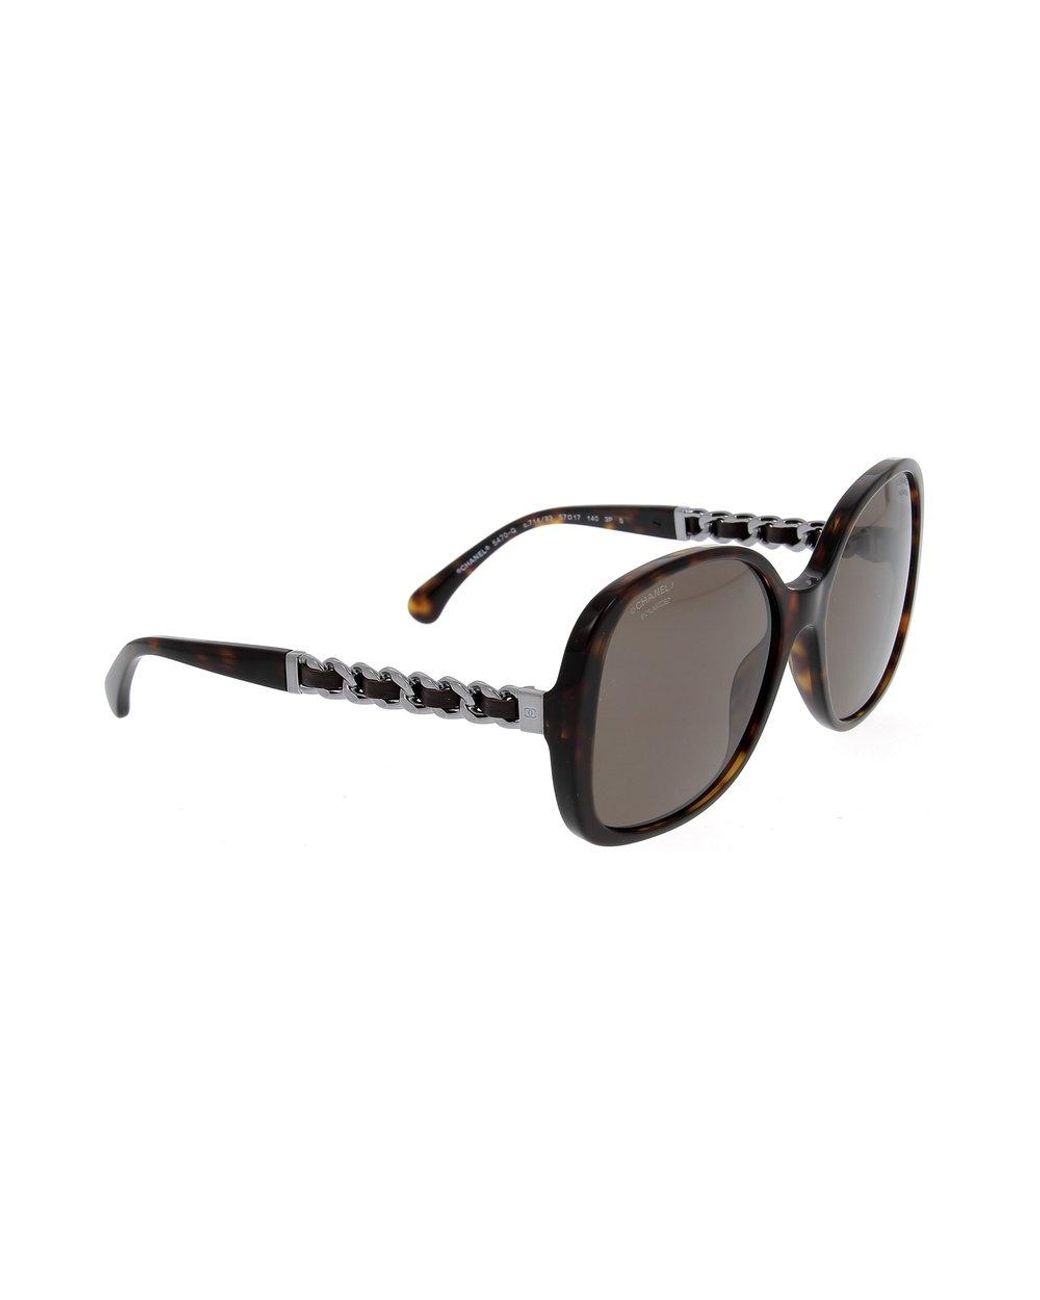 Chanel Oversized Square Frame Sunglasses in Black